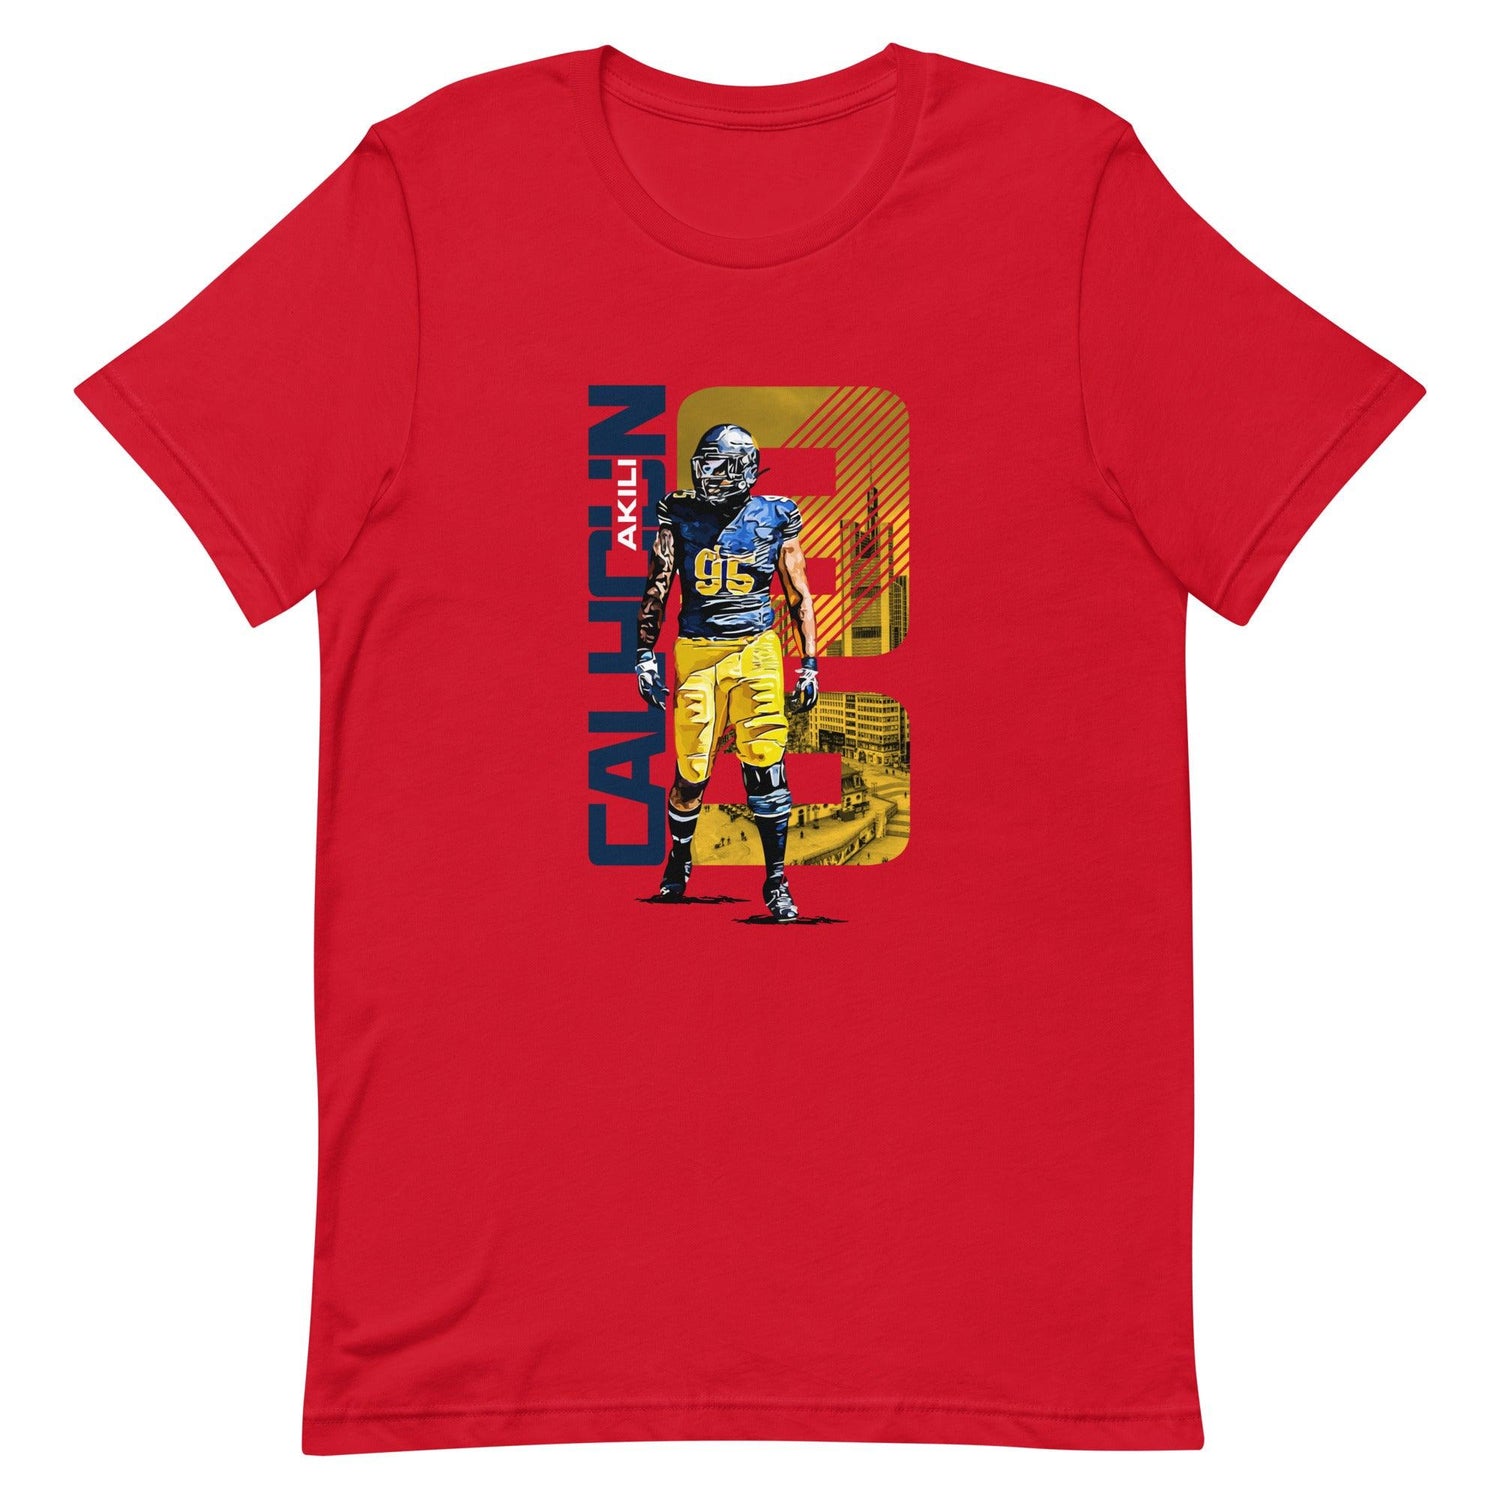 Akili Calhoun Jr. "Gameday" t-shirt - Fan Arch